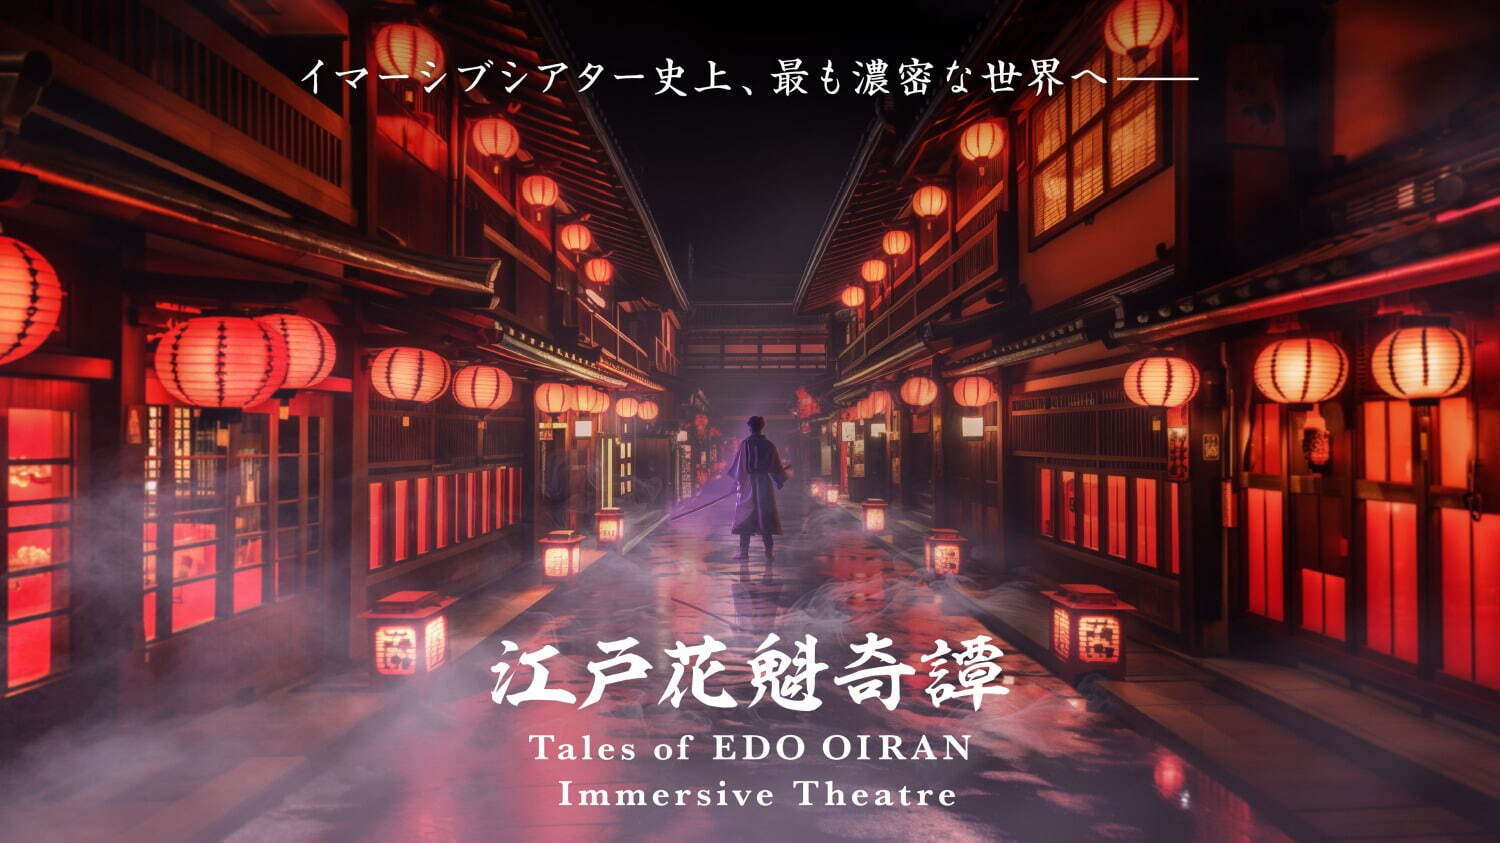 Tales of Edo Oiran